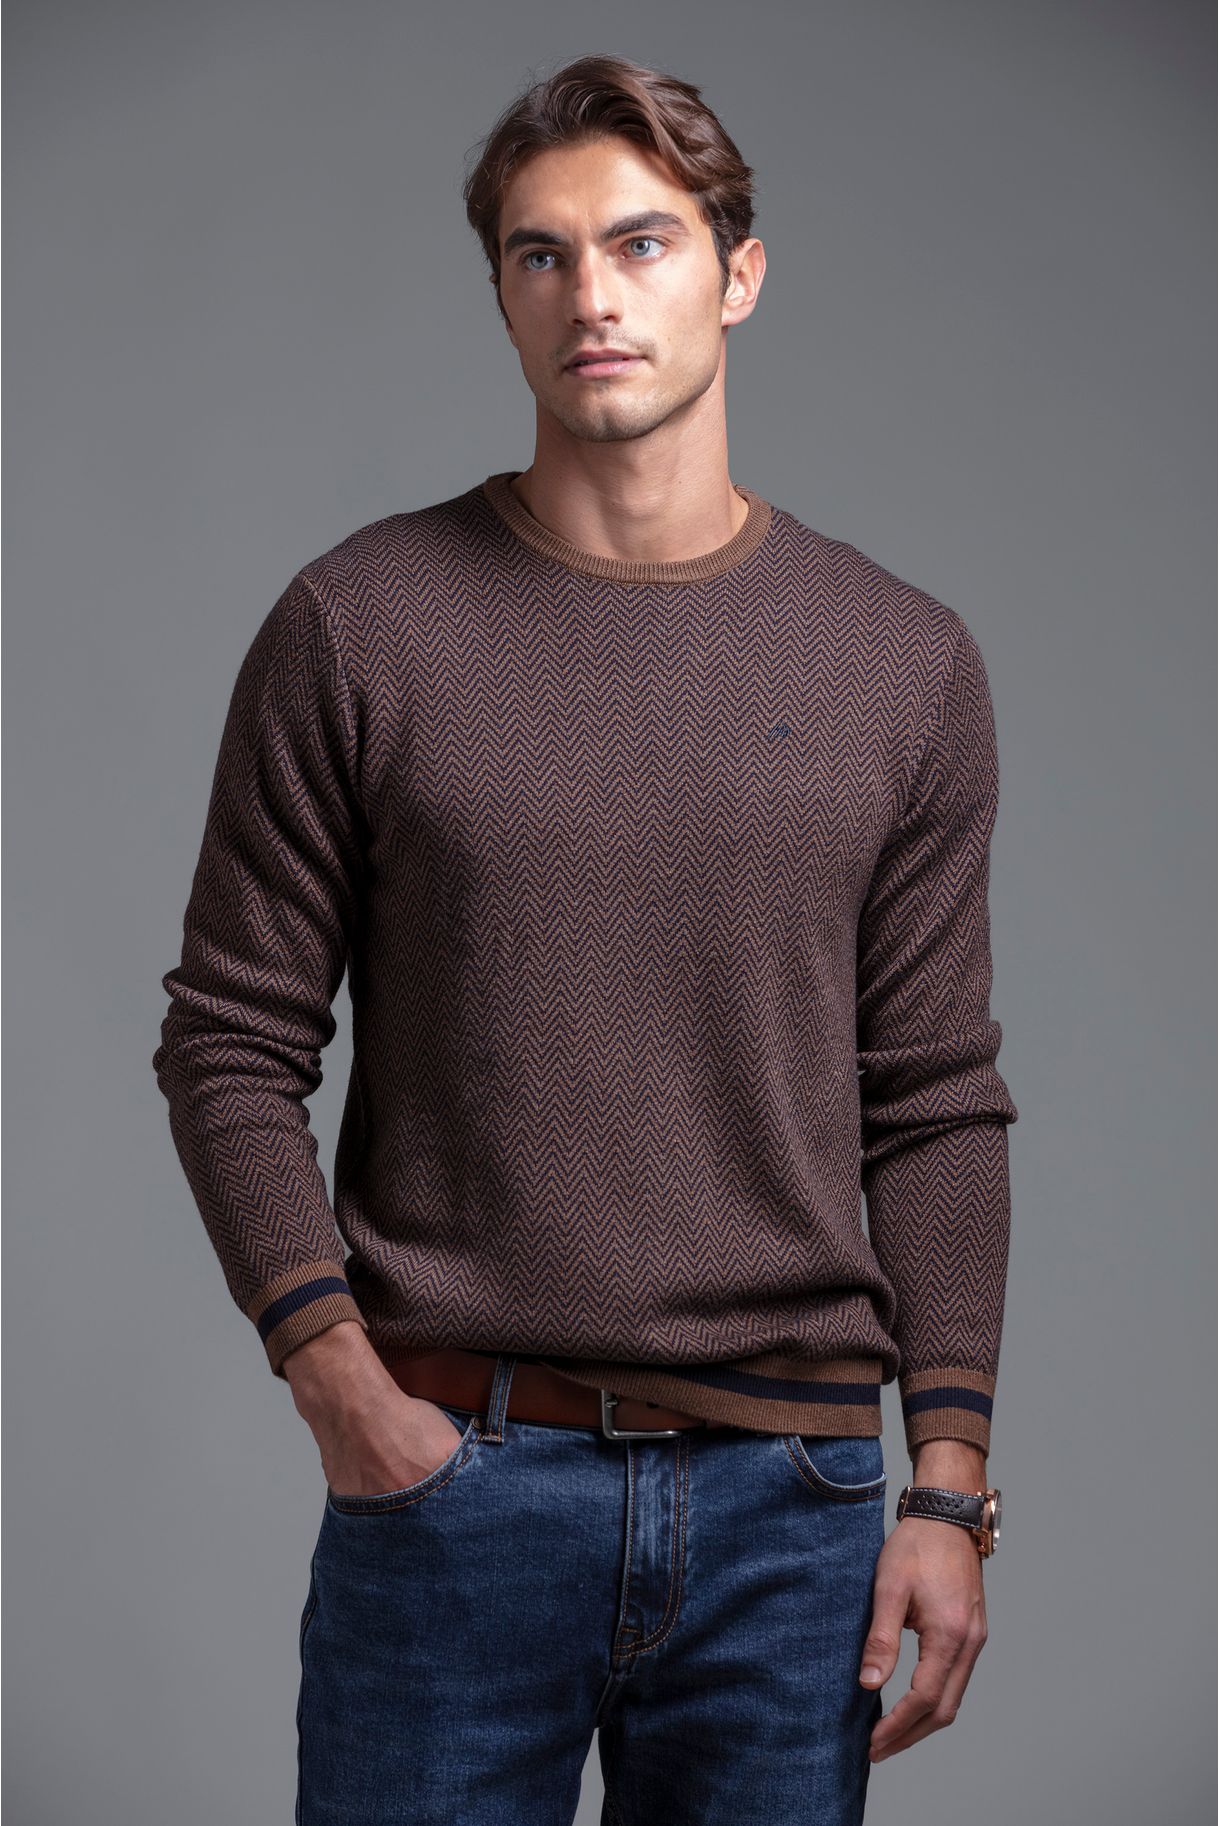 Jacquard round neck knit sweater